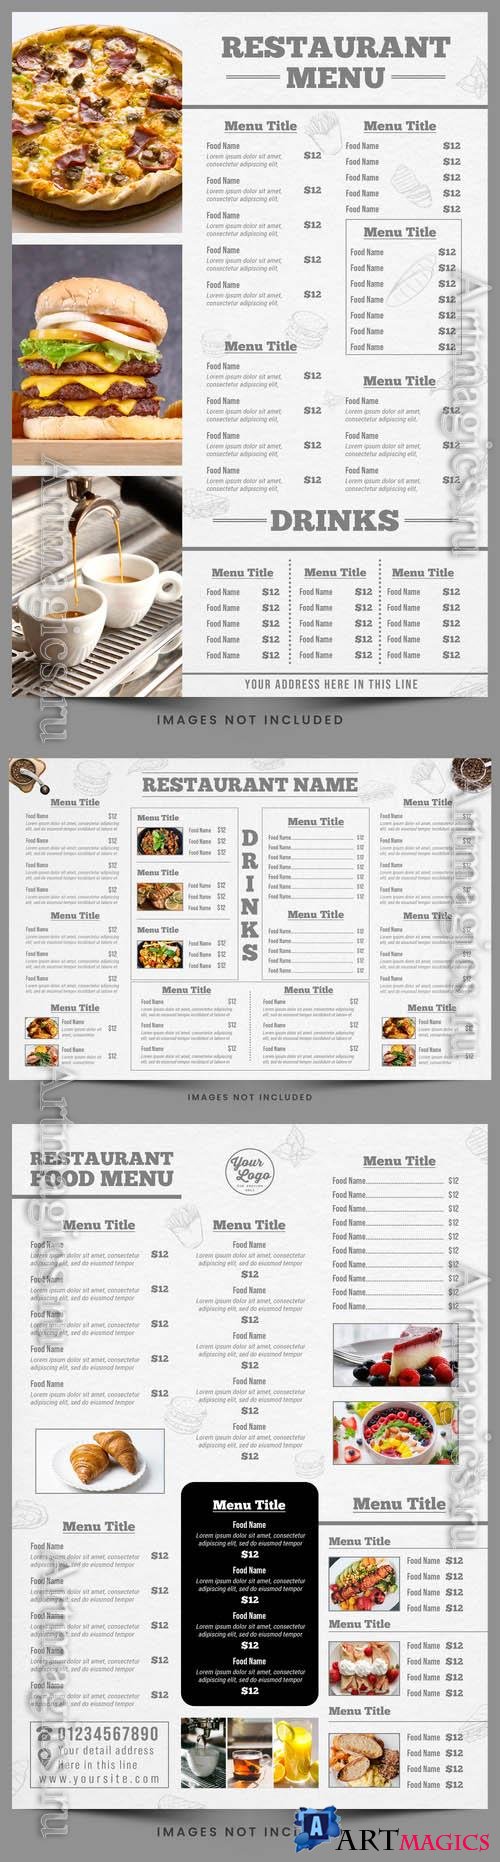 PSD menu for a restaurant called the burgers